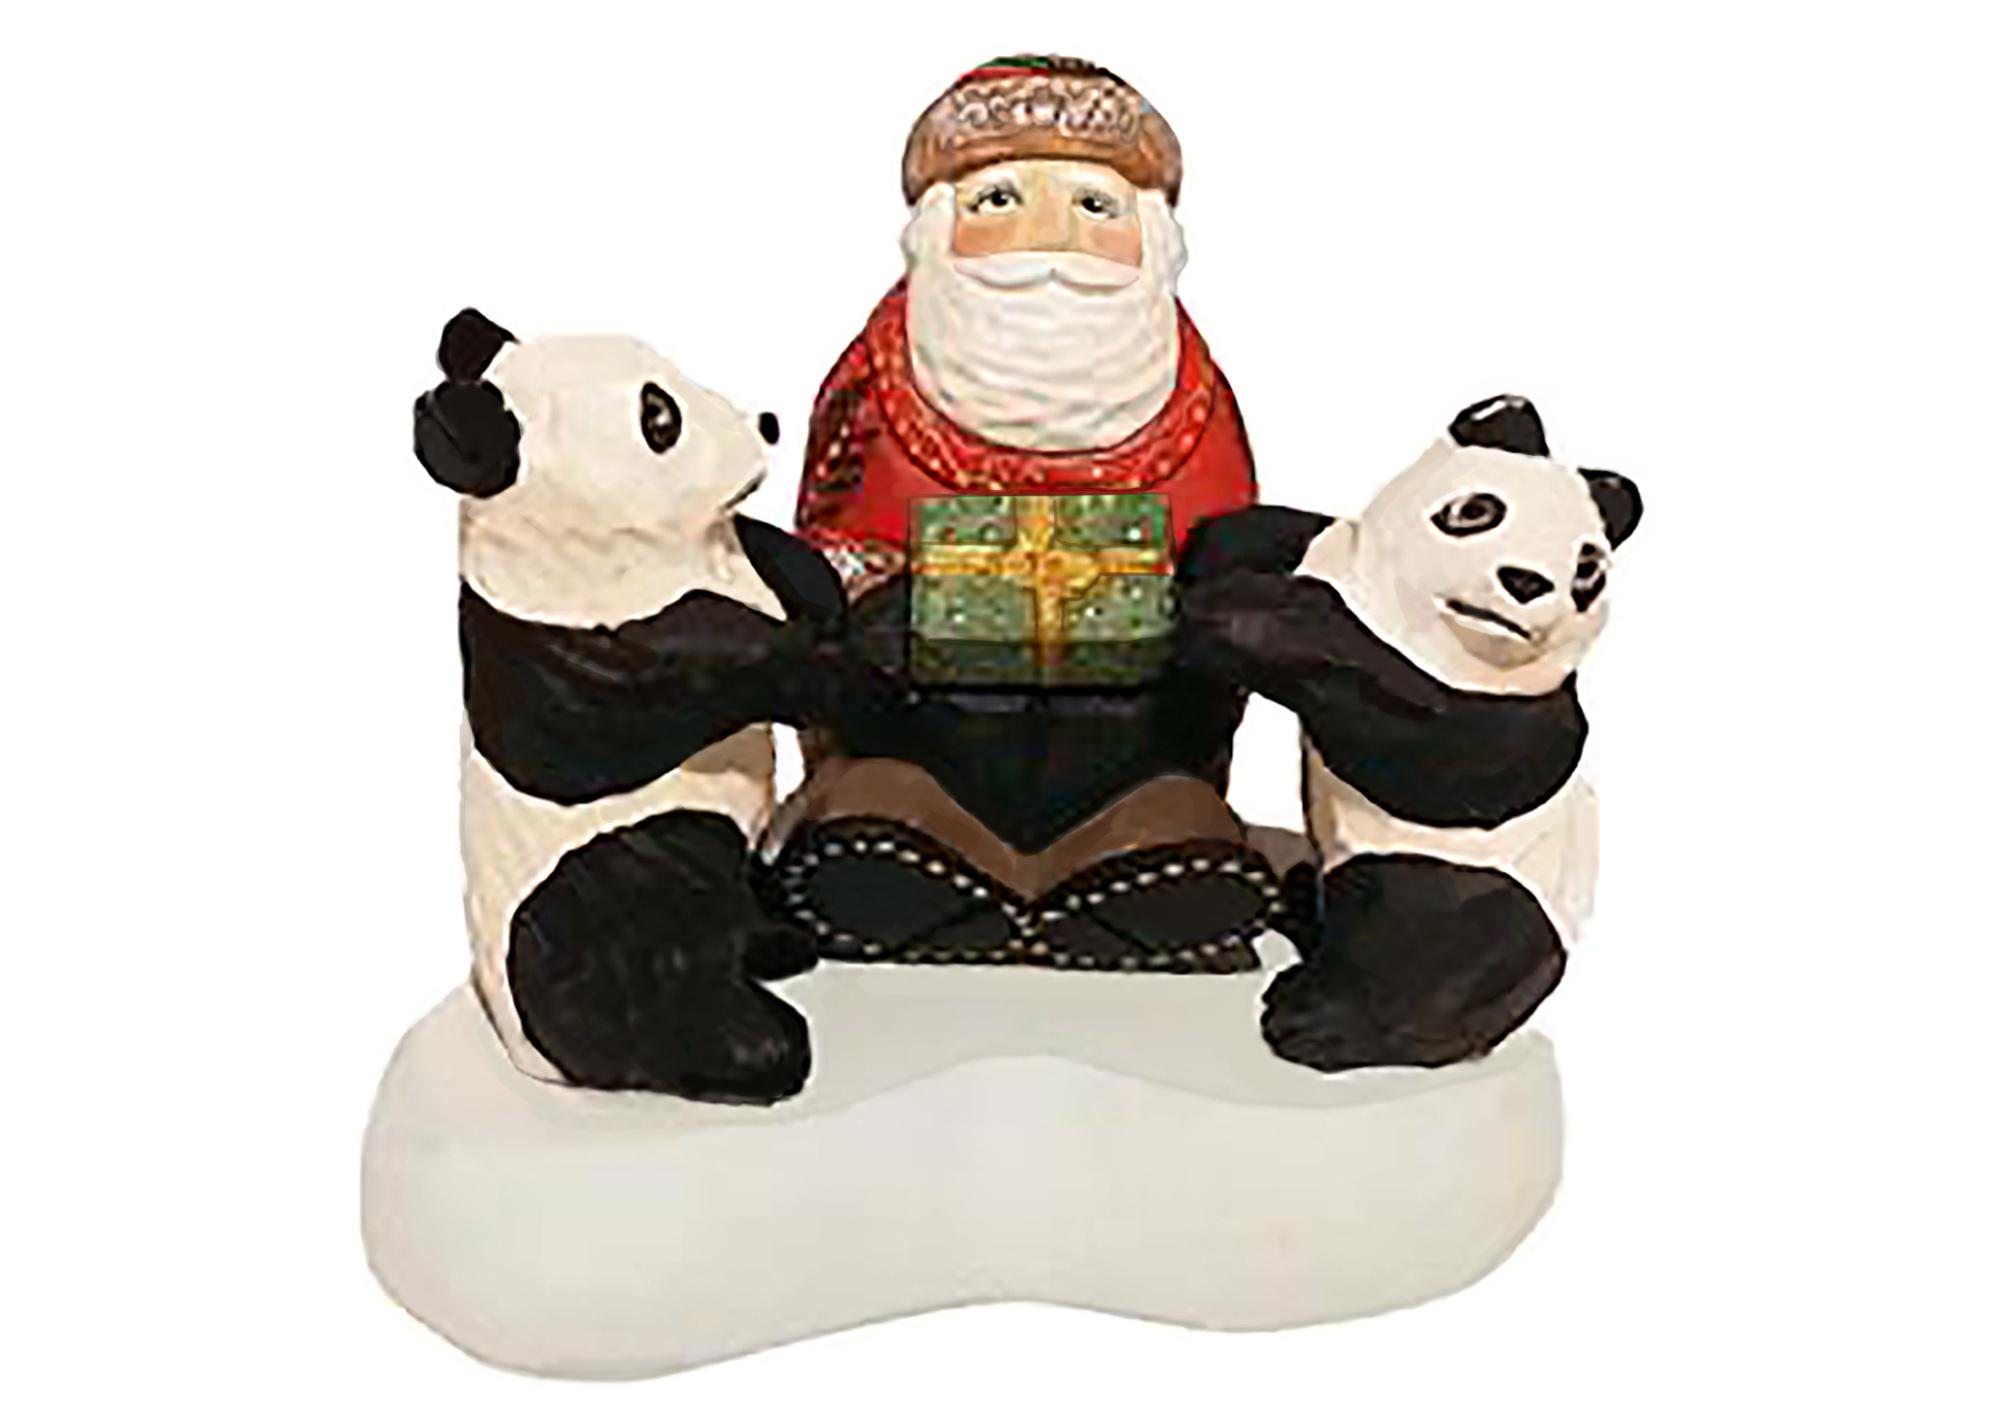 Buy Santa Sitting with Panda Bears 5" x 5" at GoldenCockerel.com